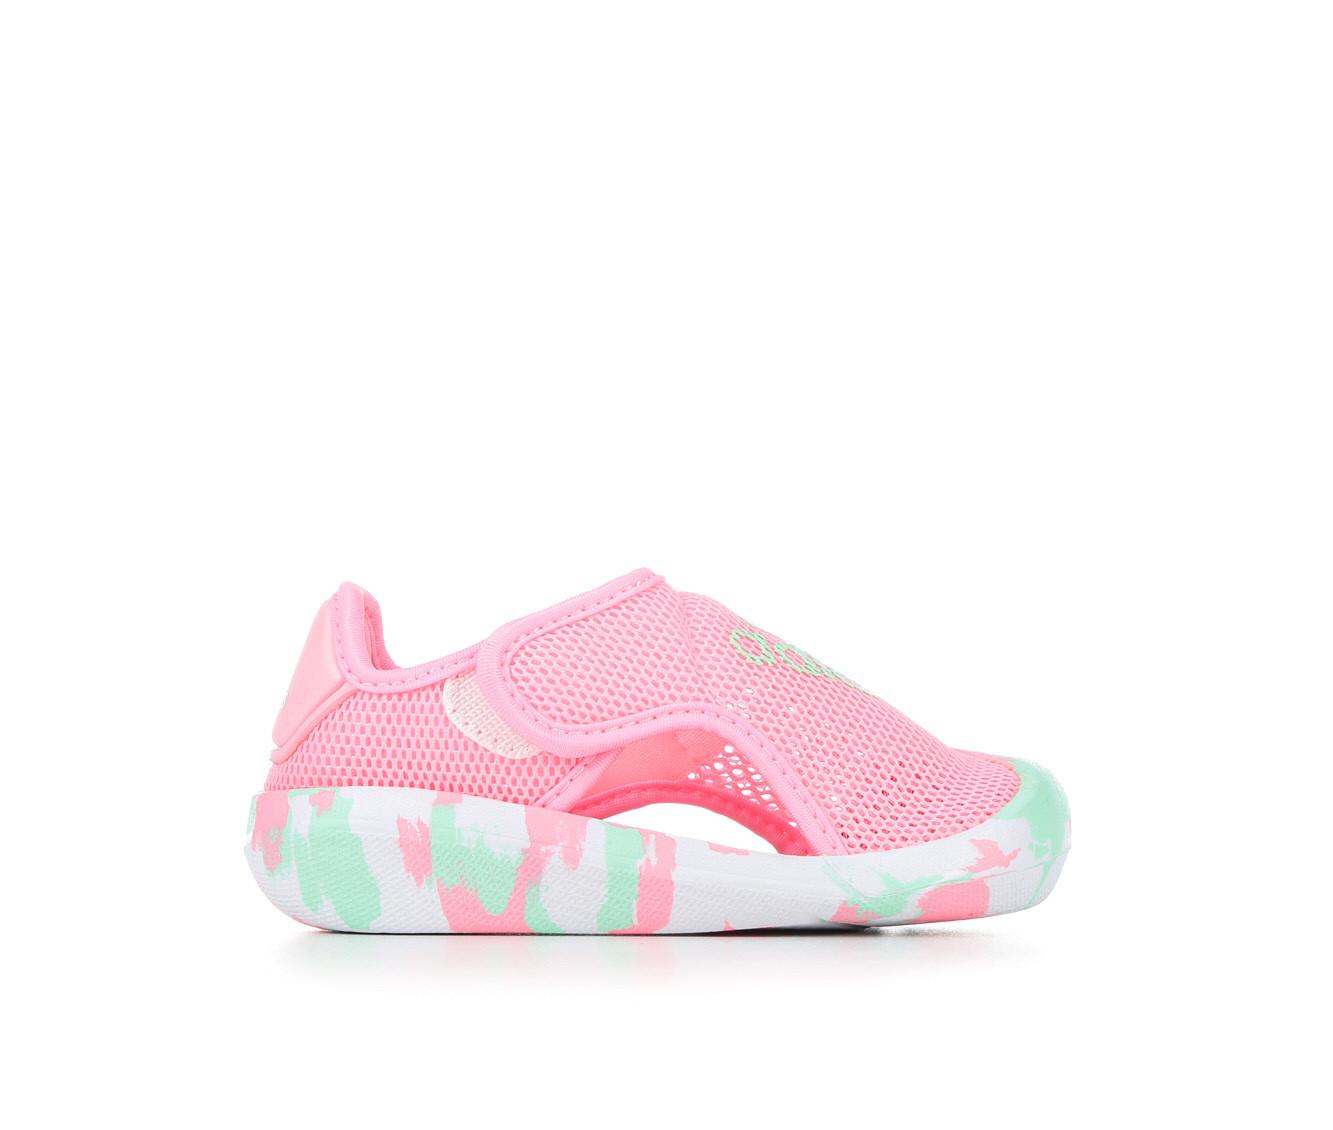 Girls' Adidas Infant & Toddler Altaventure Water Shoes